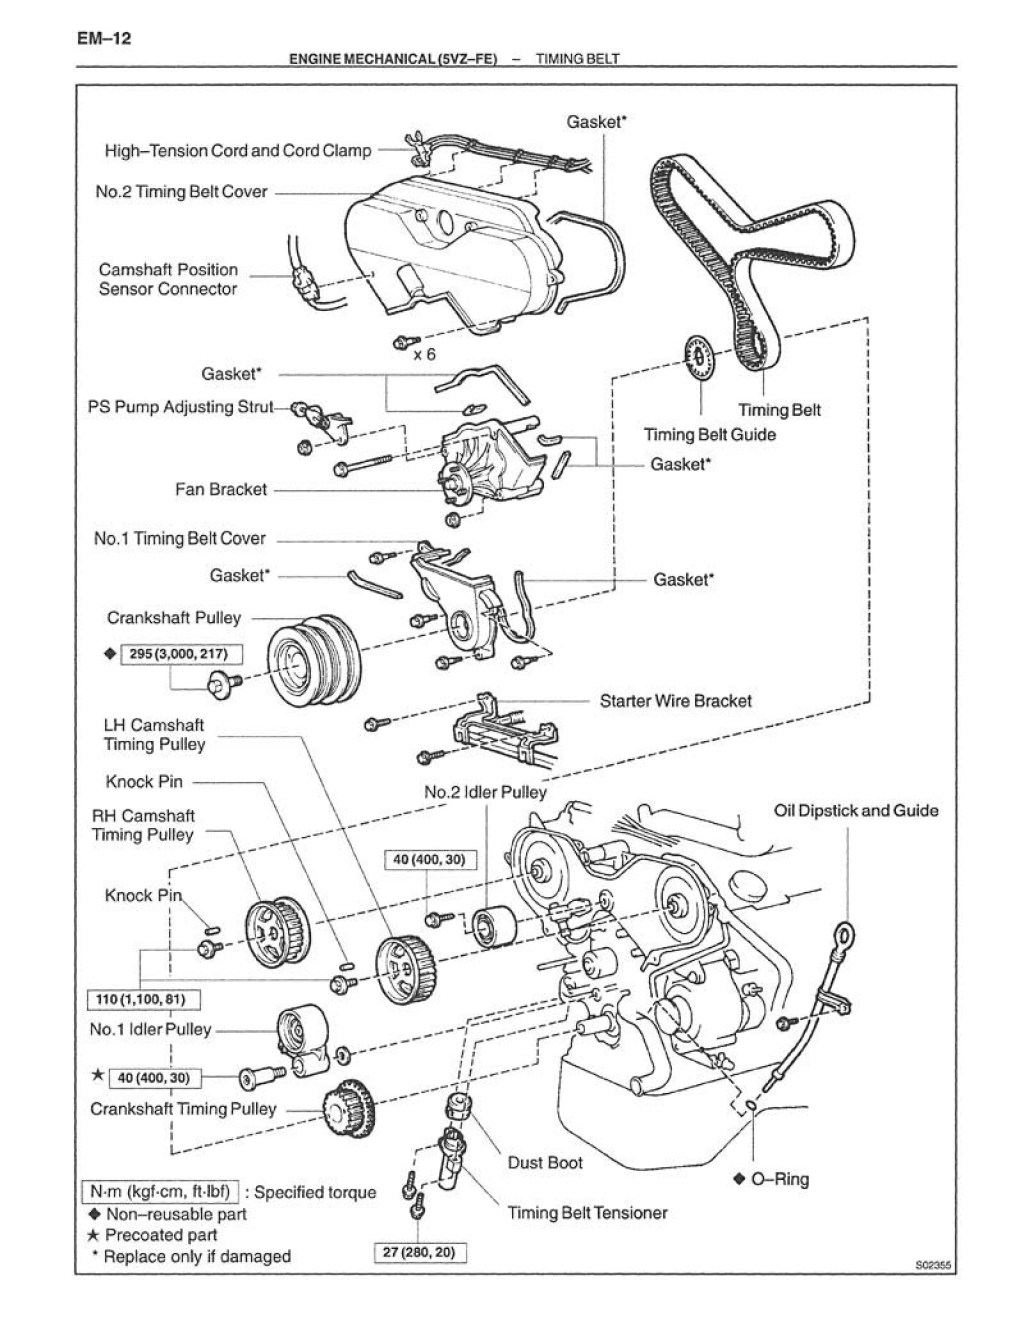 Picture of: Toyota Tacoma Shop Service Repair Manual Book Engine Drivetrain OEM